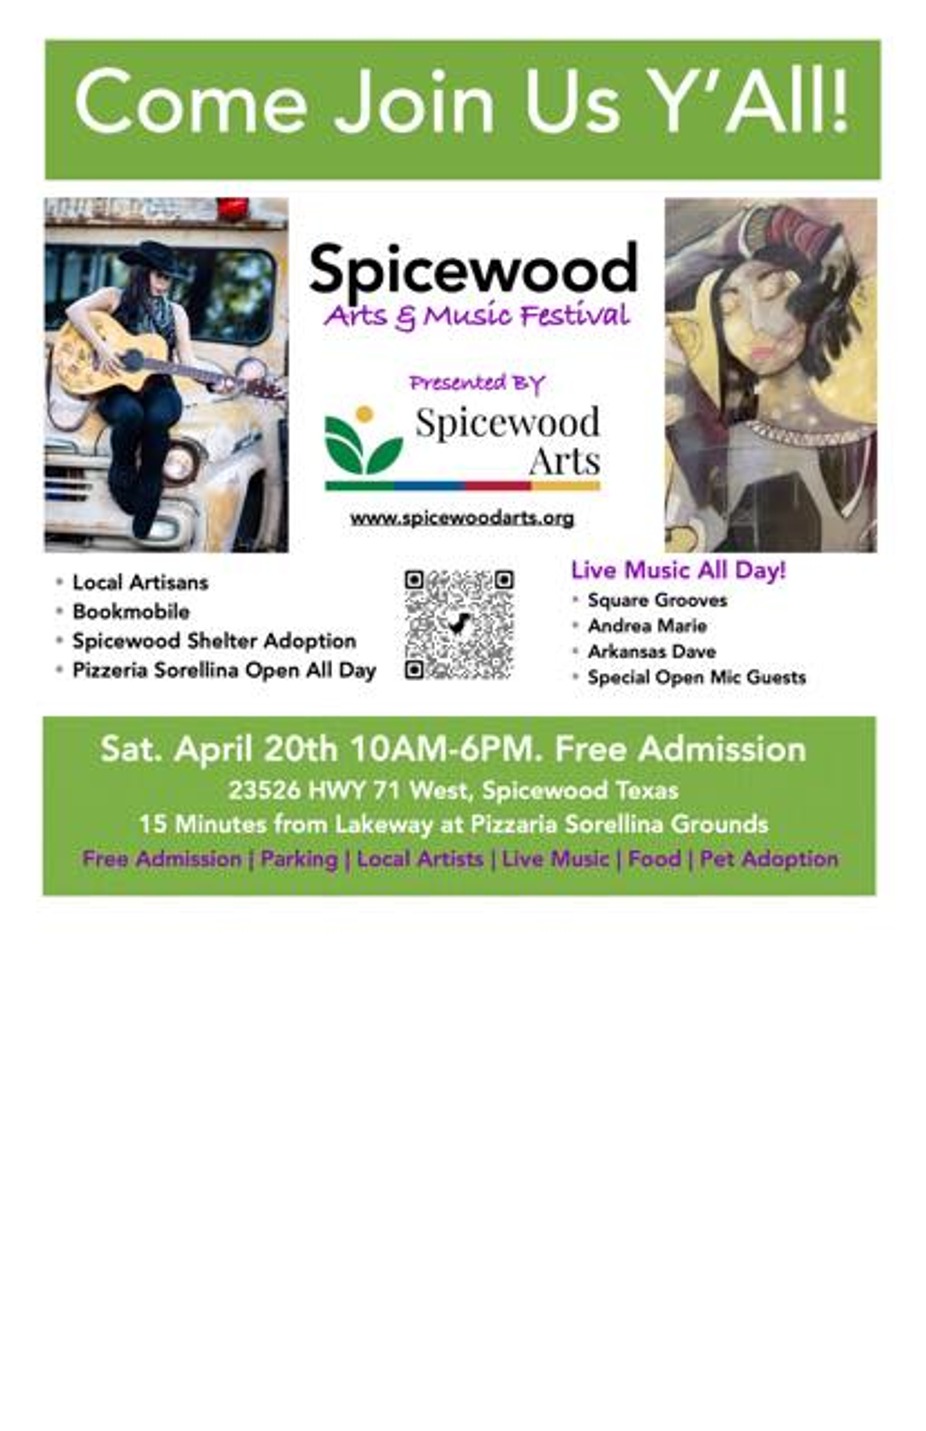 Spicewood Arts & Music Festival event photo